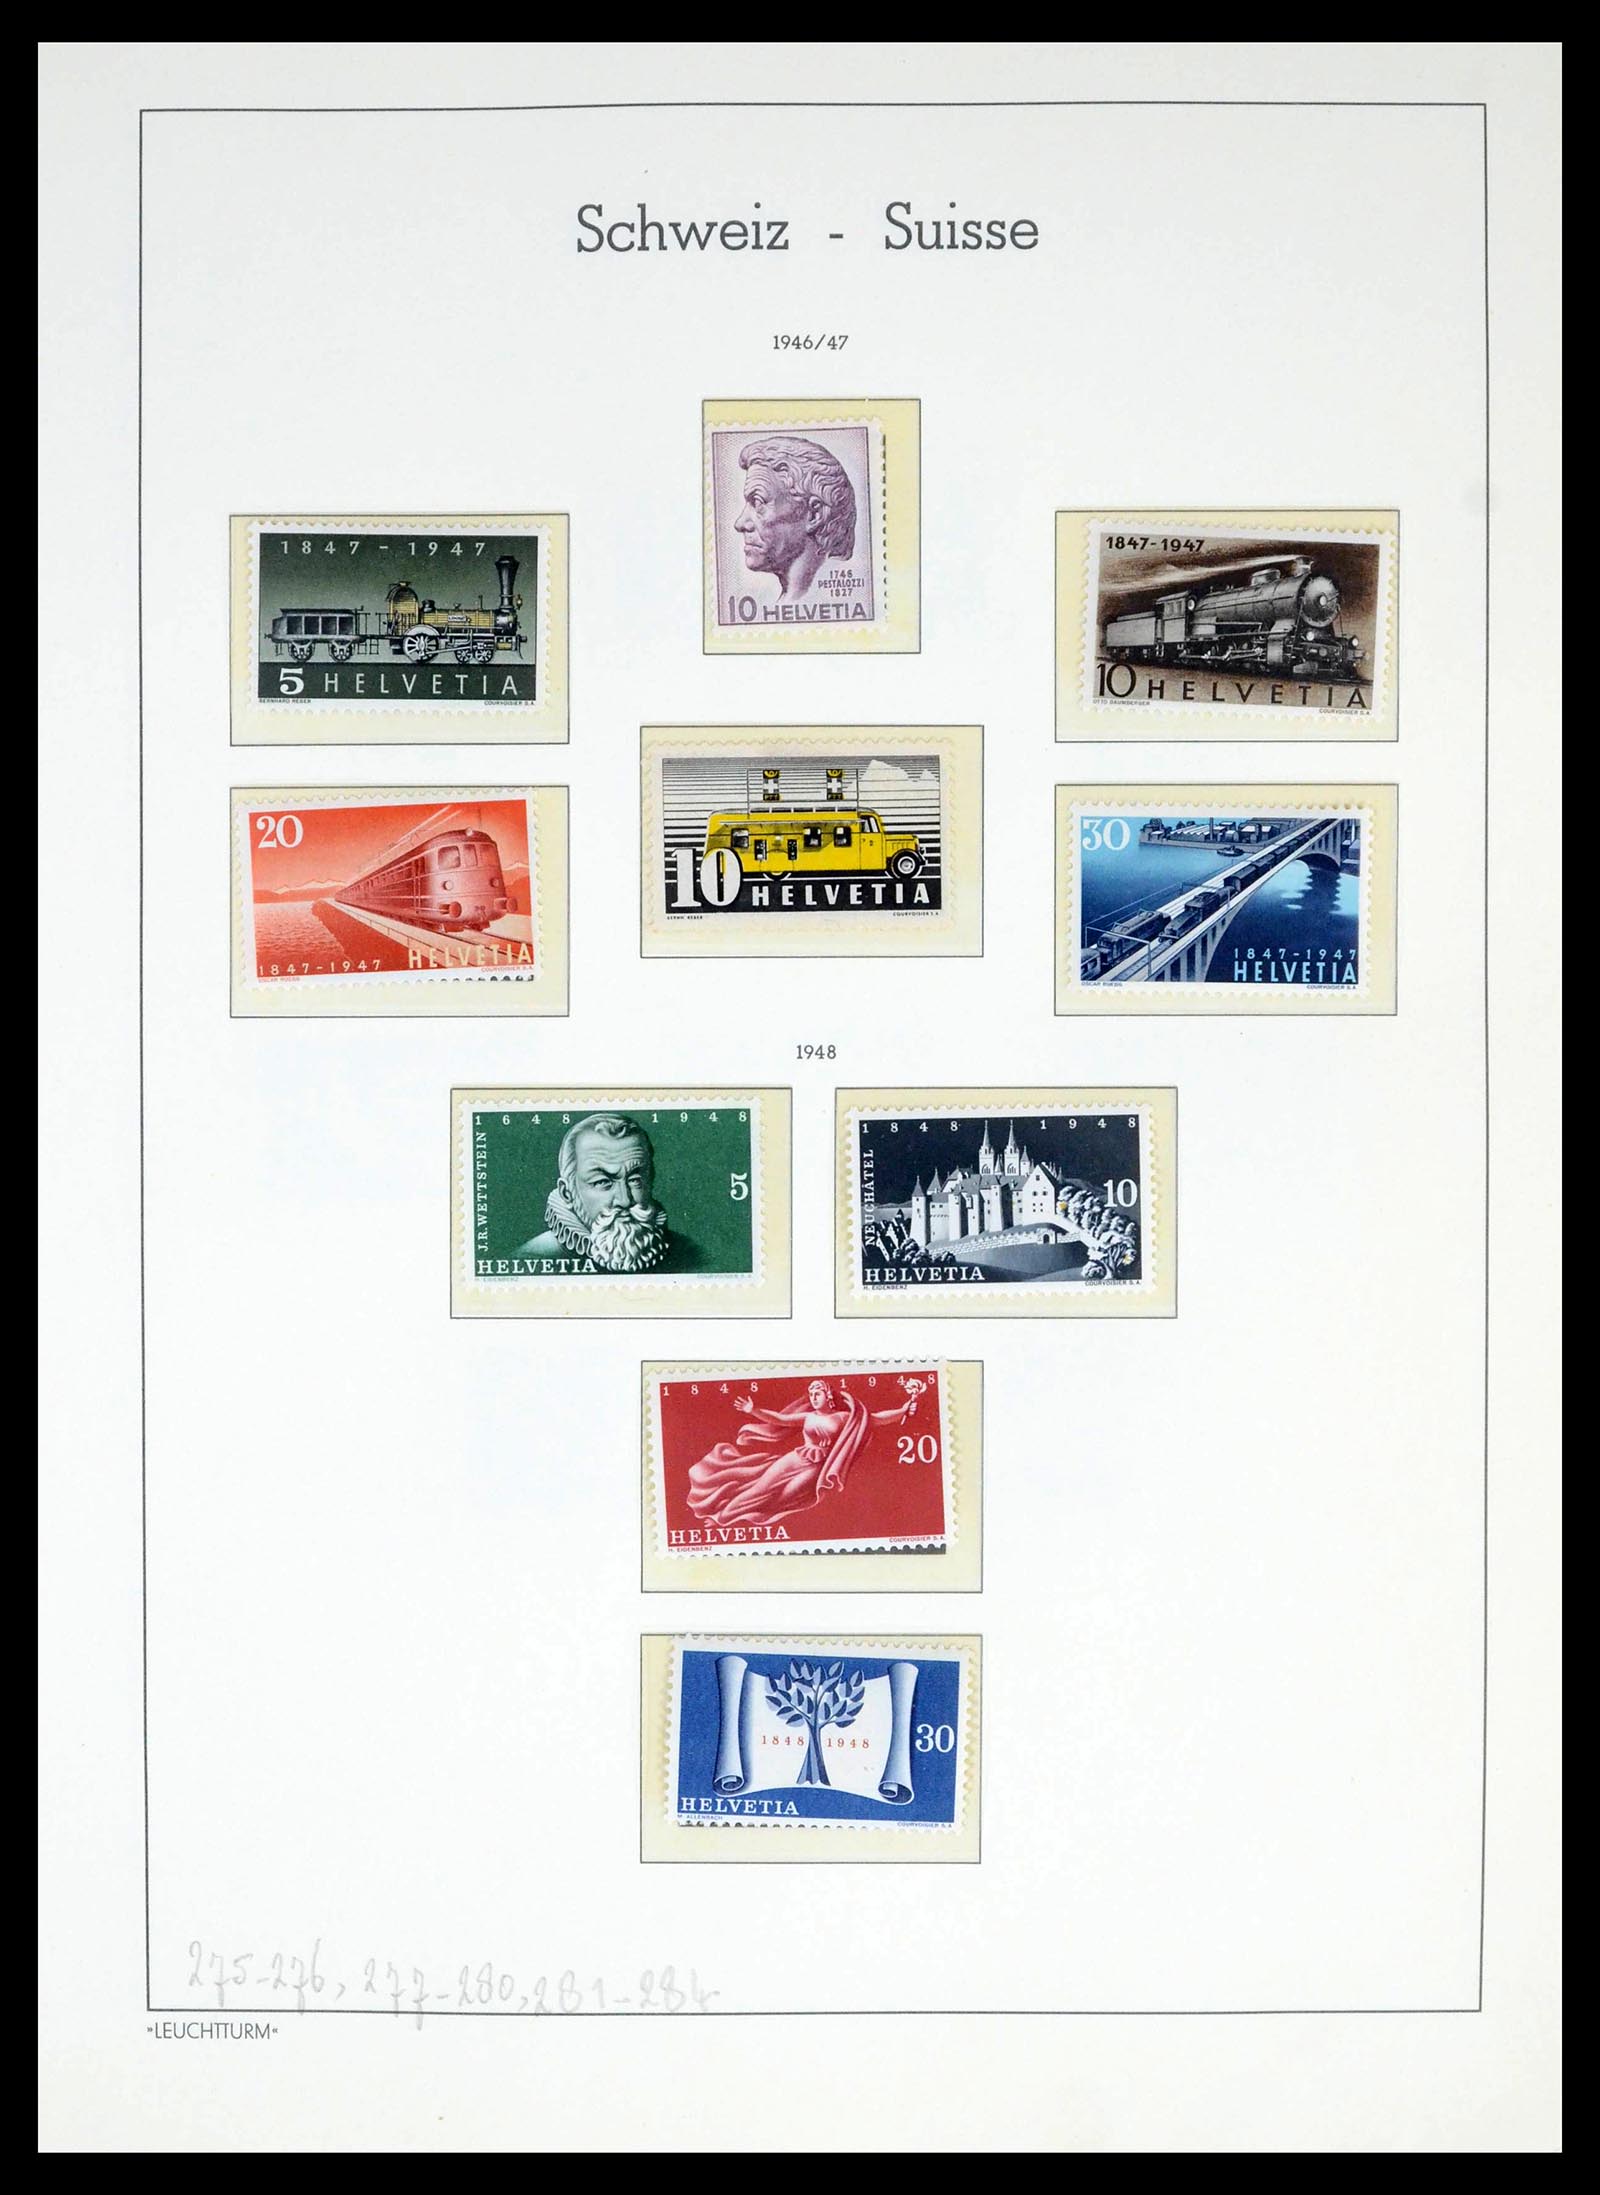 39420 0029 - Stamp collection 39420 Switzerland 1862-1974.